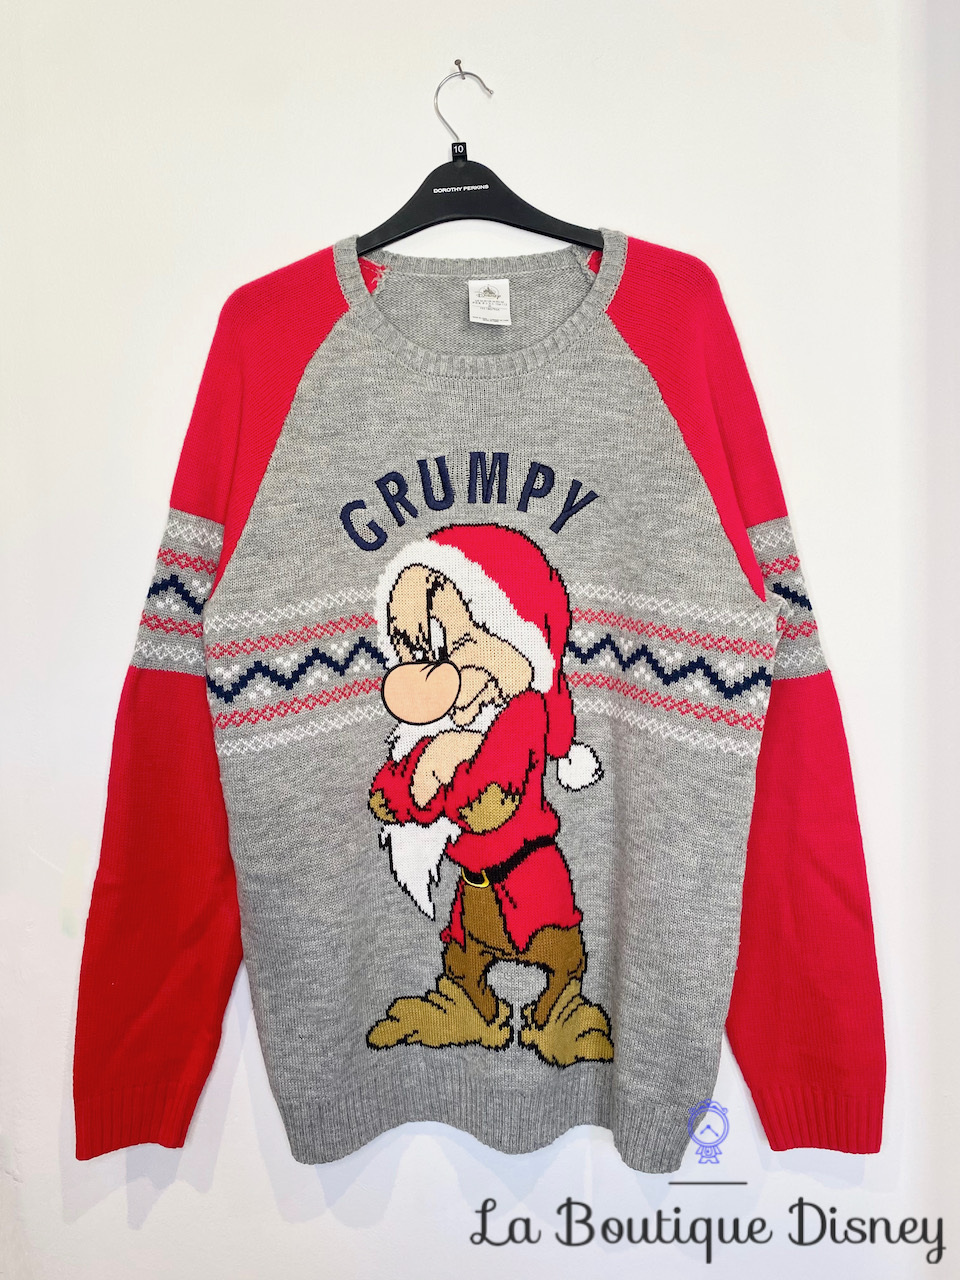 Pull Noël Grincheux Grumpy Disney Store taille M Blanche Neige et les sept nains